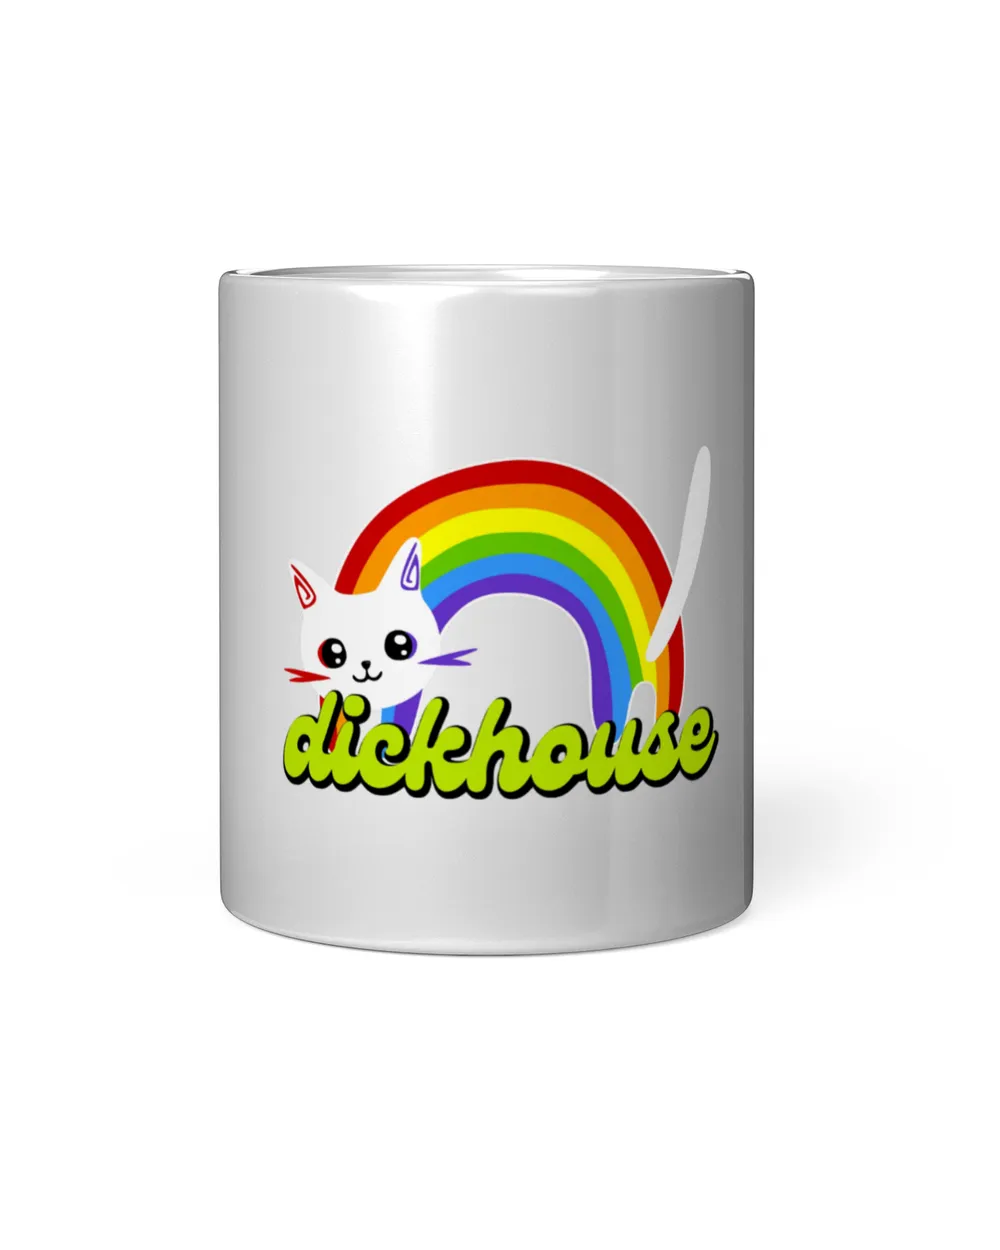 Dickhouse  Dickhouse Productions  Cat Purride  Kitten Essential T-Shirt